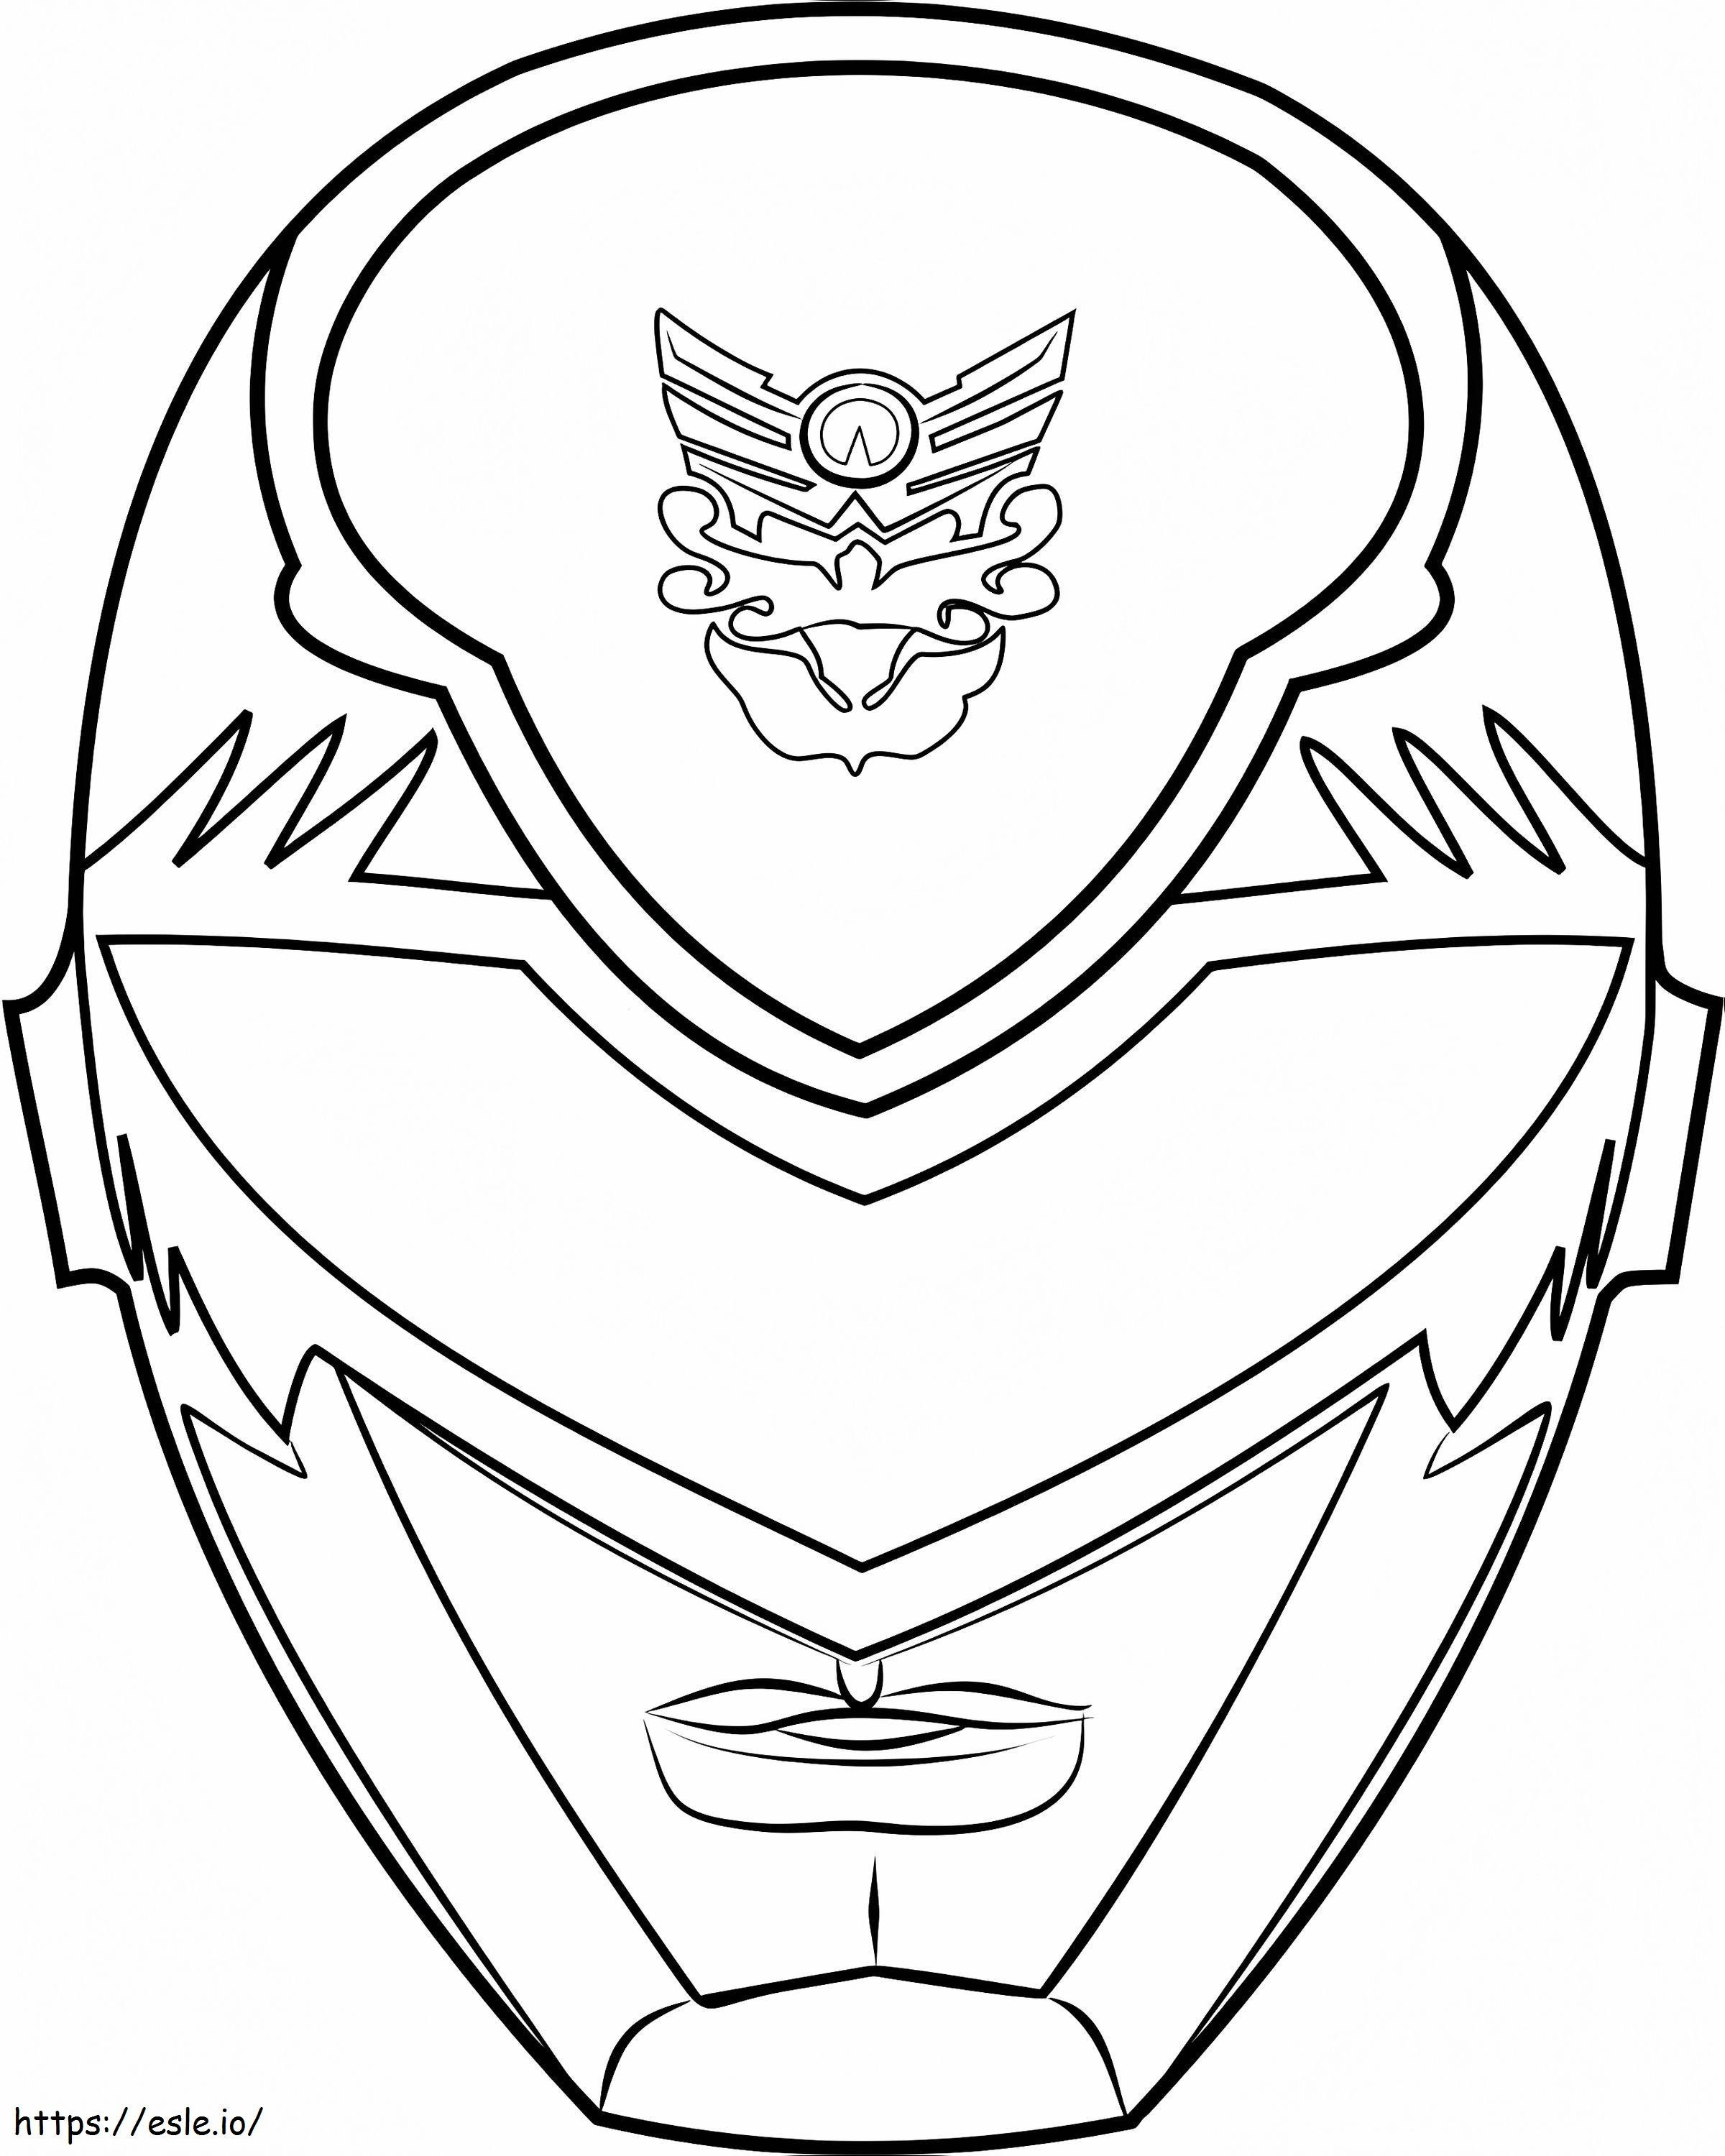 1530501643Power Ranger Mask1 värityskuva